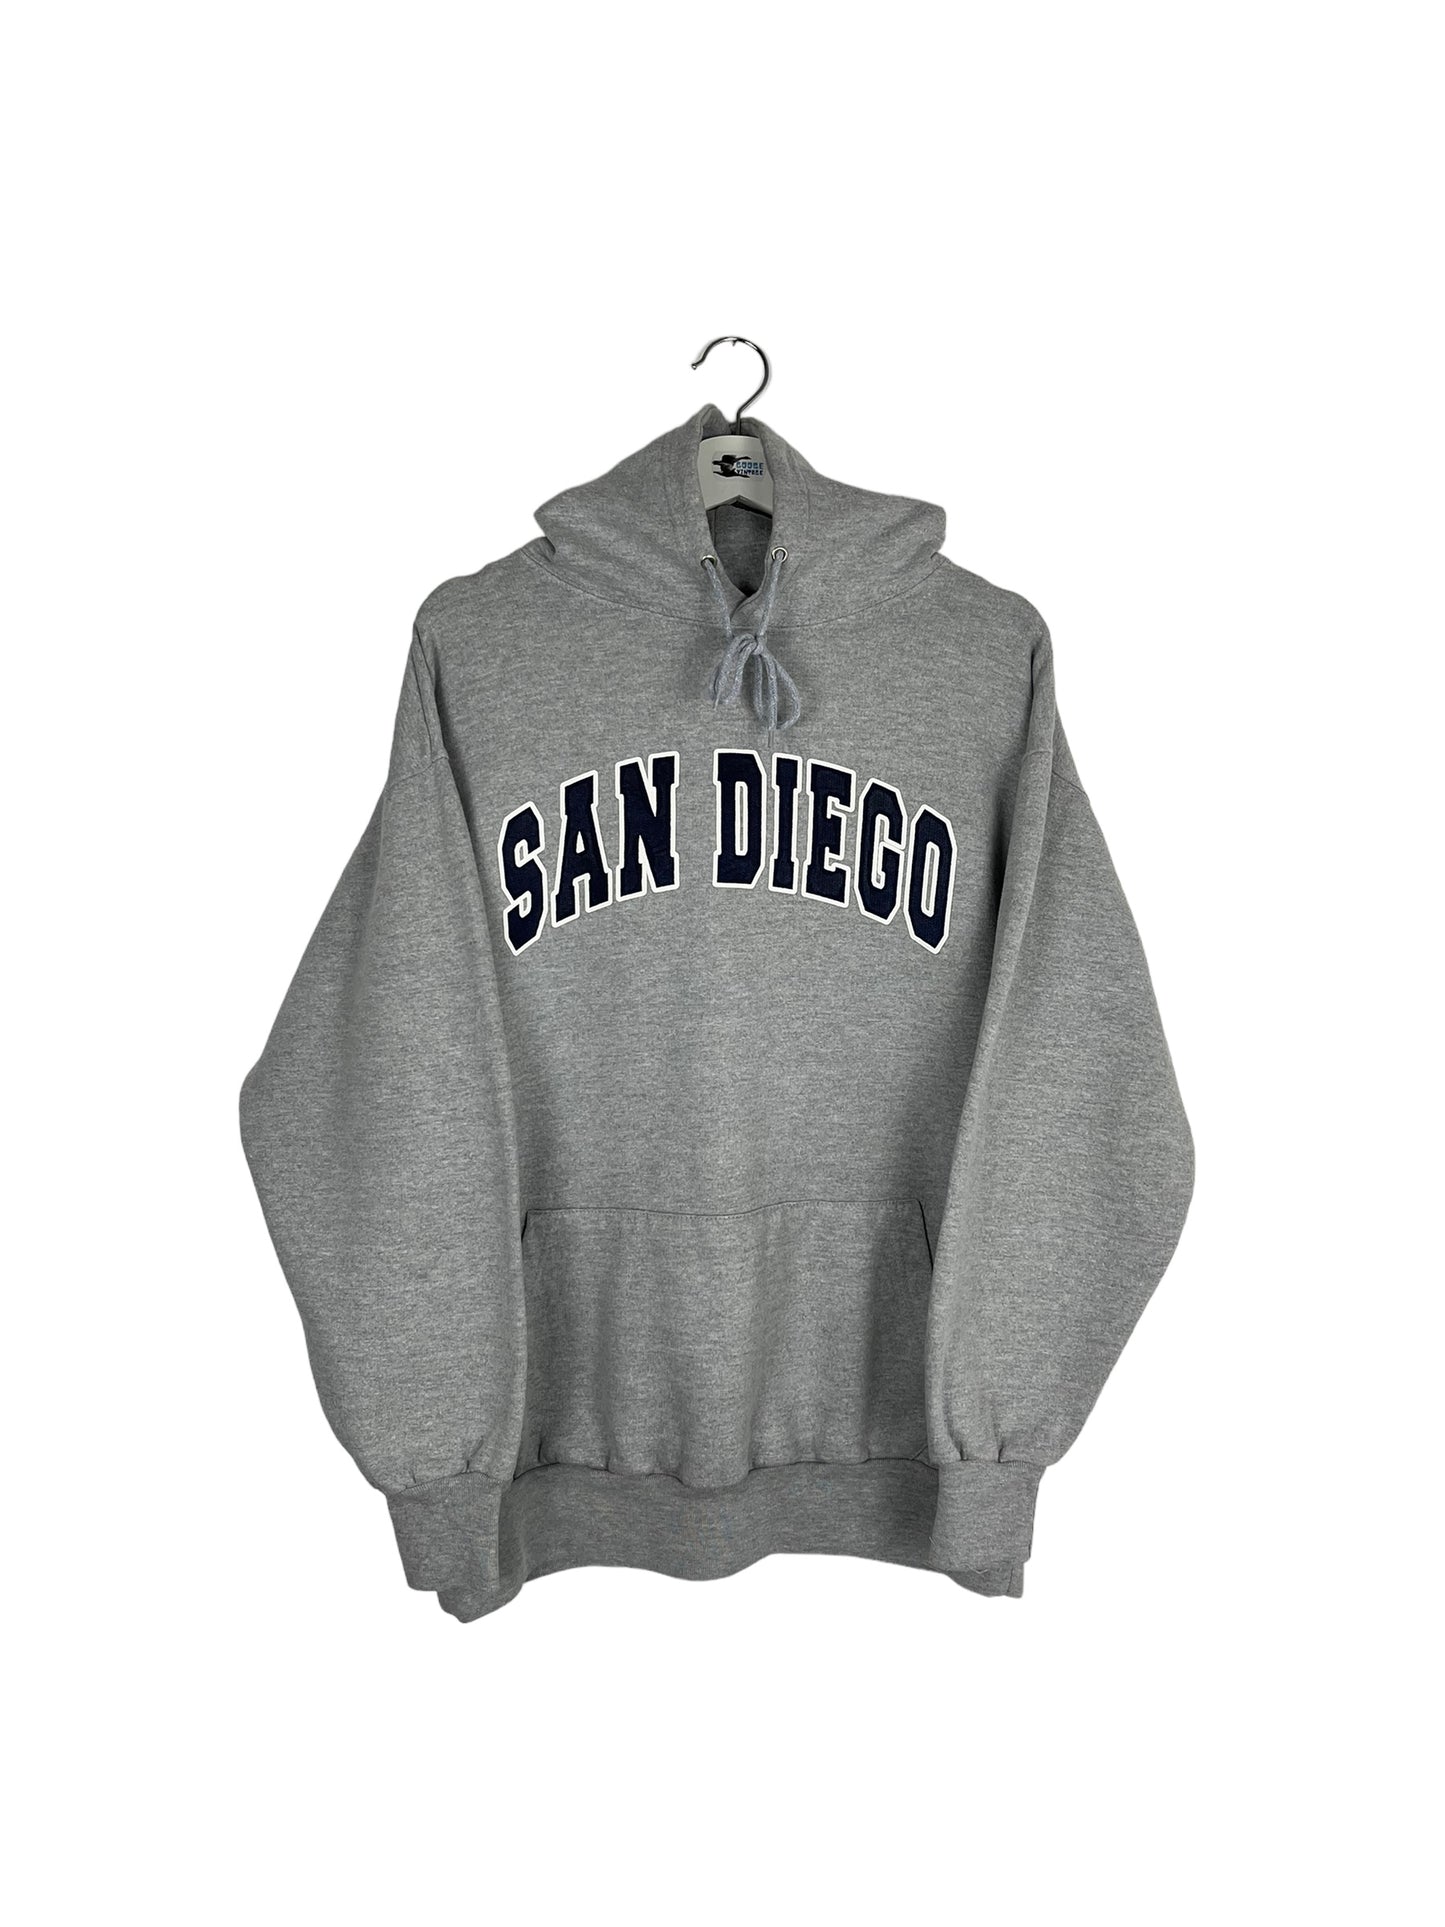 Vintage 90’s San Diego Hooded Sweatshirt - XL